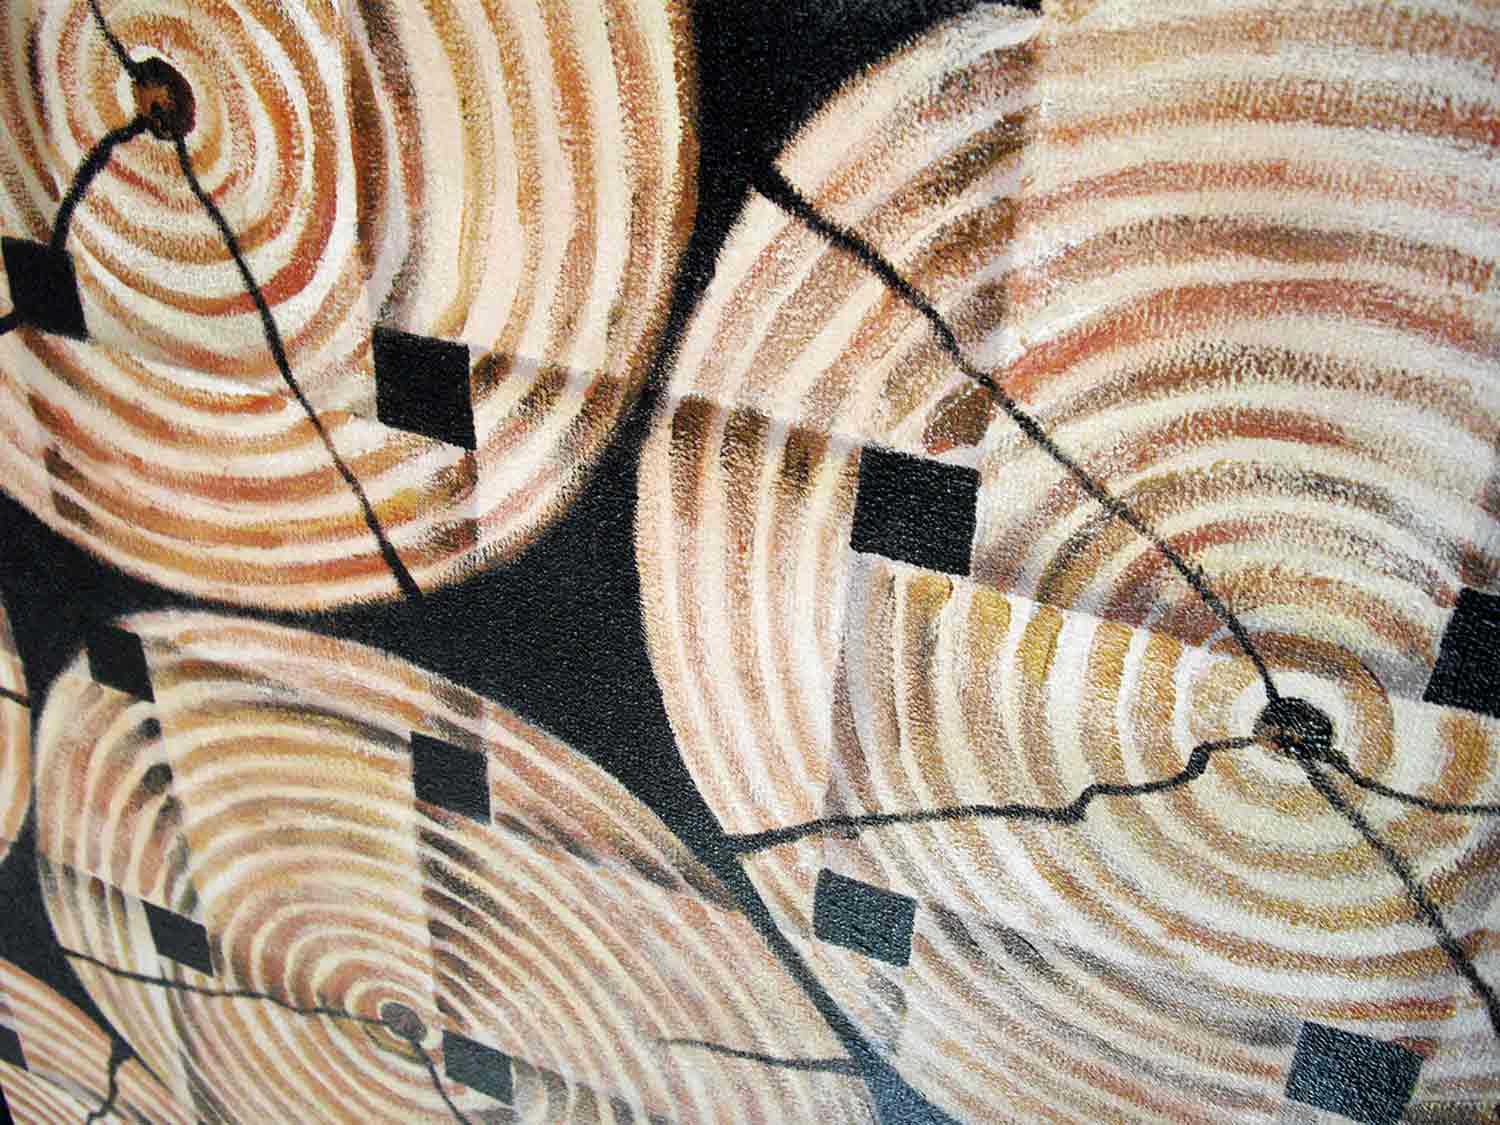 Woven wood II (detail)